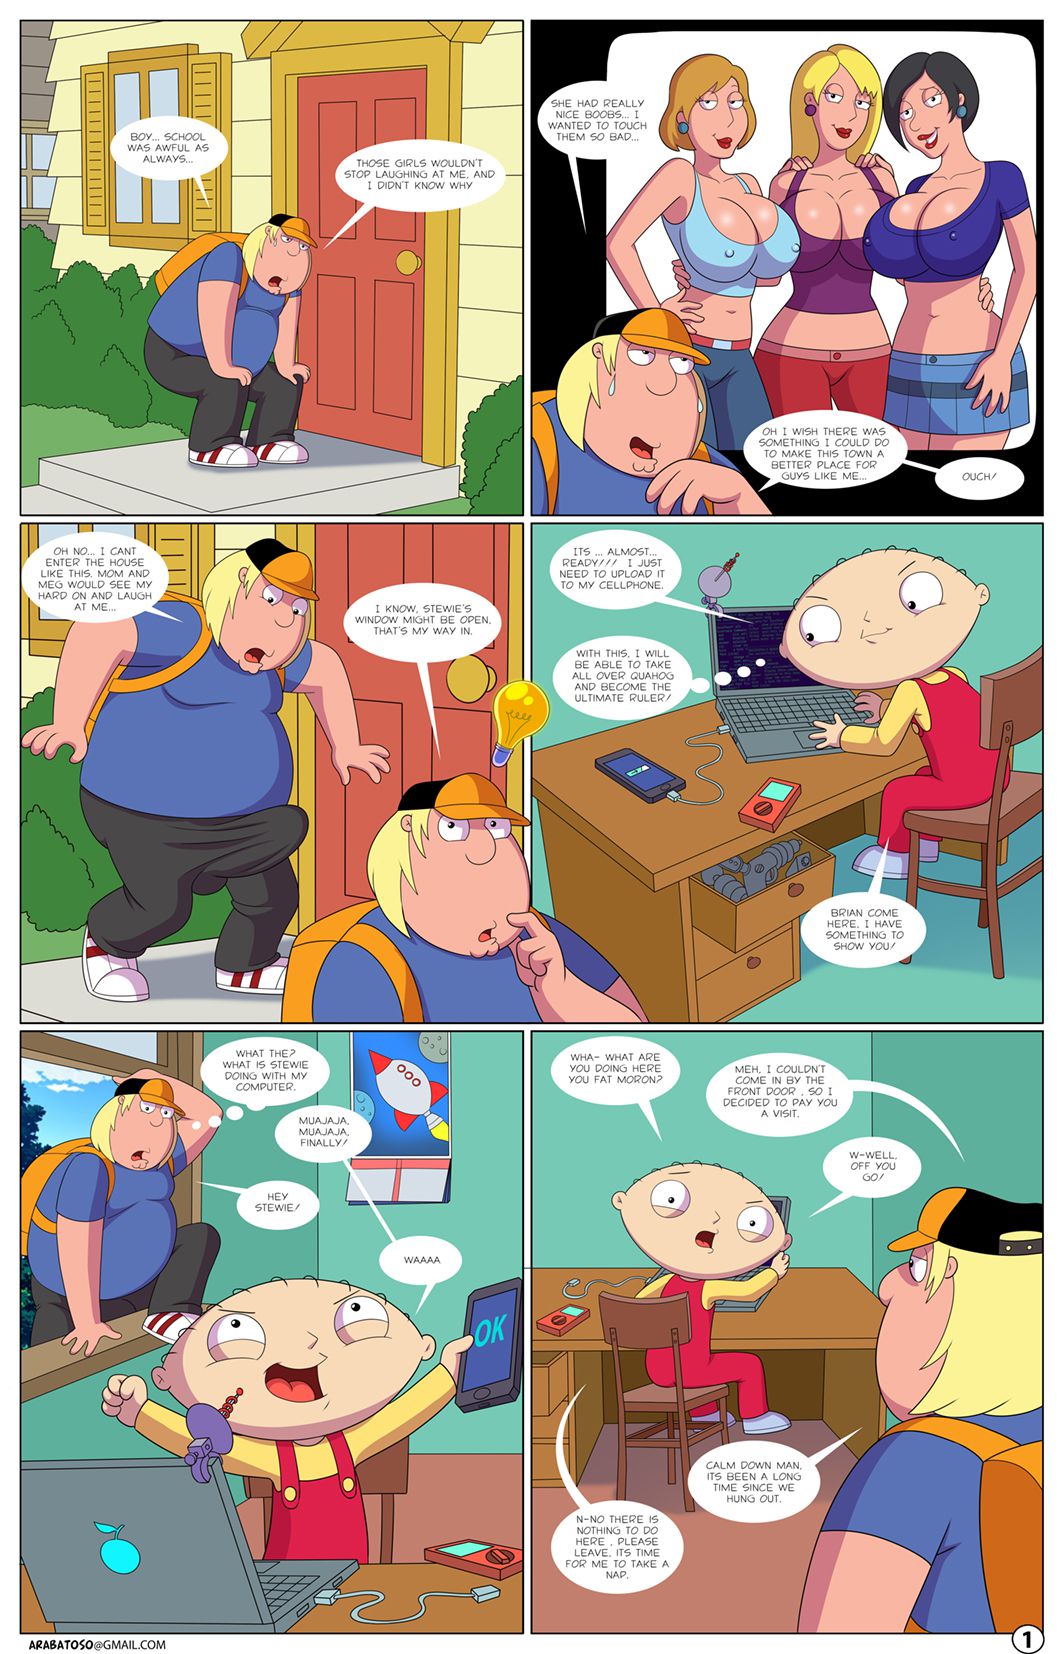 Family Guy Shemale Porn Comics - Quahog Diaries (Family Guy) [Arabatos] - 1-2 - Porn Cartoon Comics